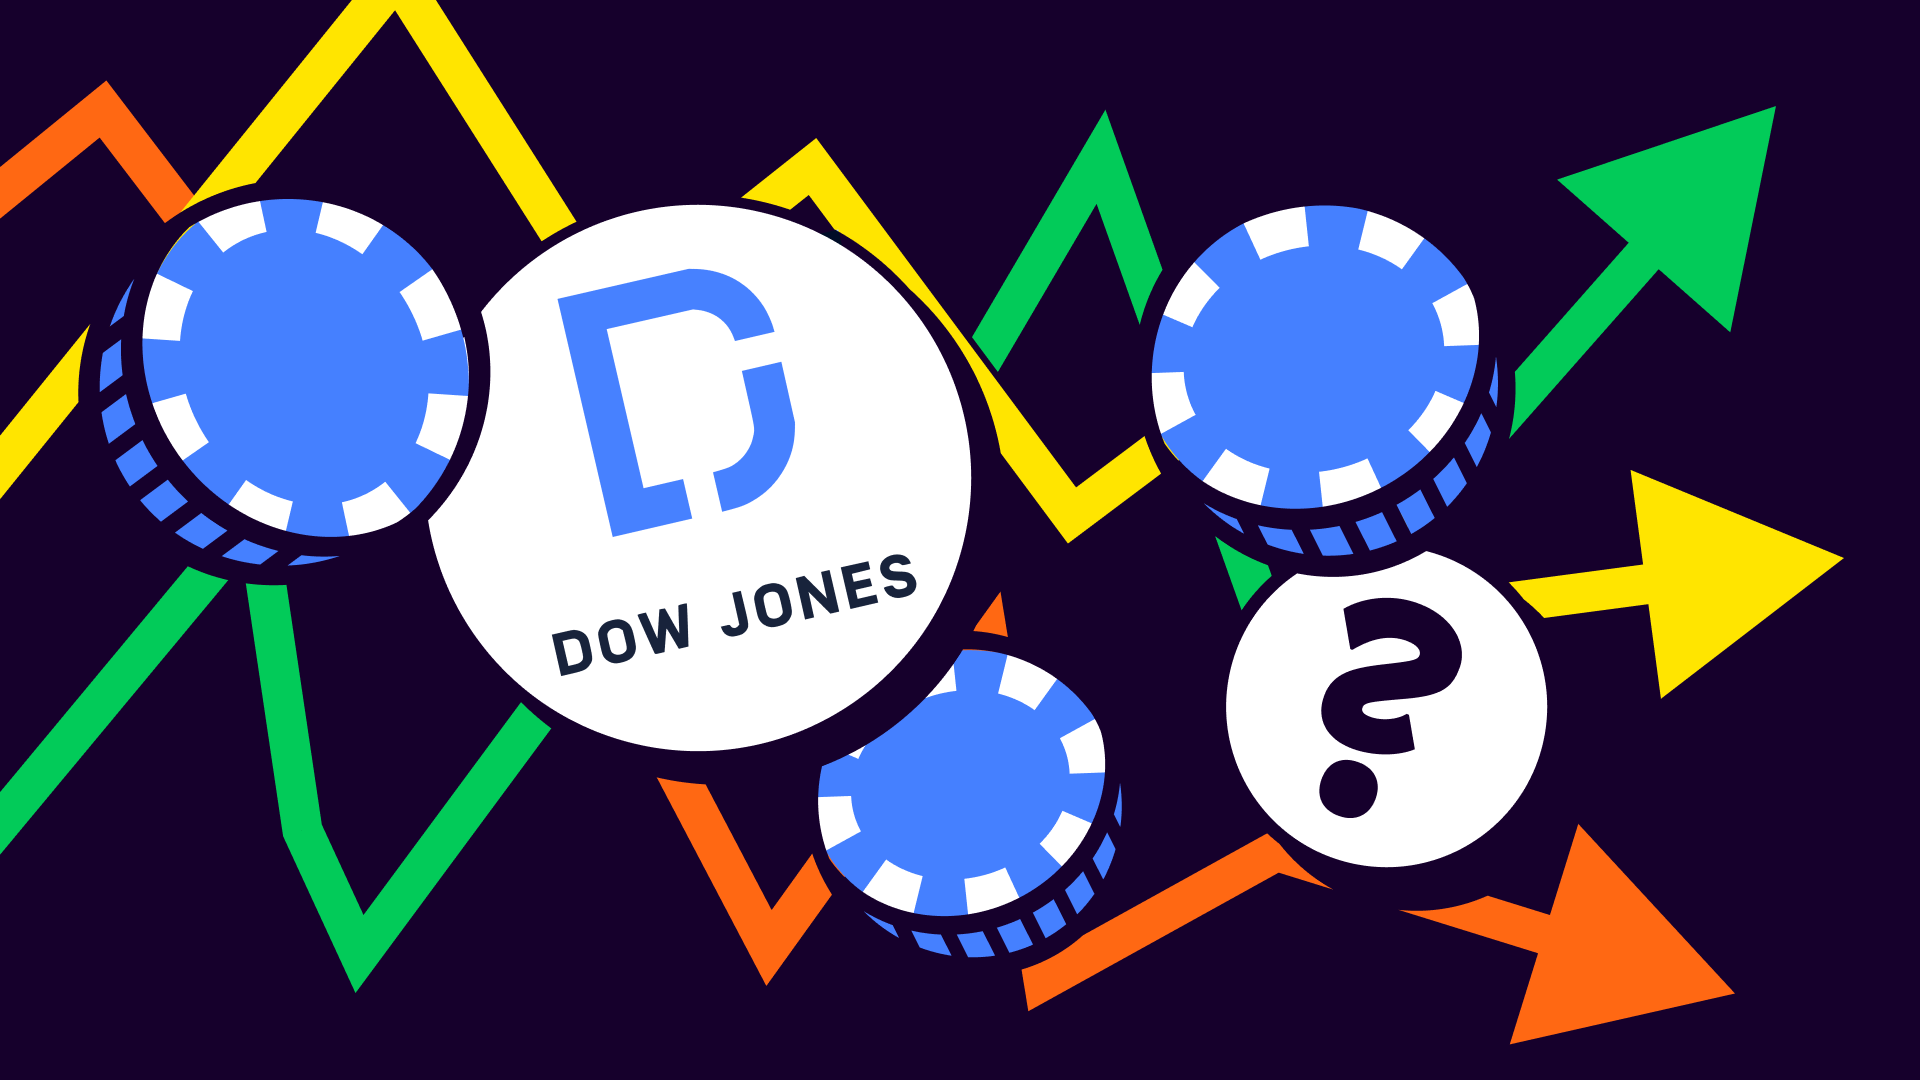 What is the Dow Jones?